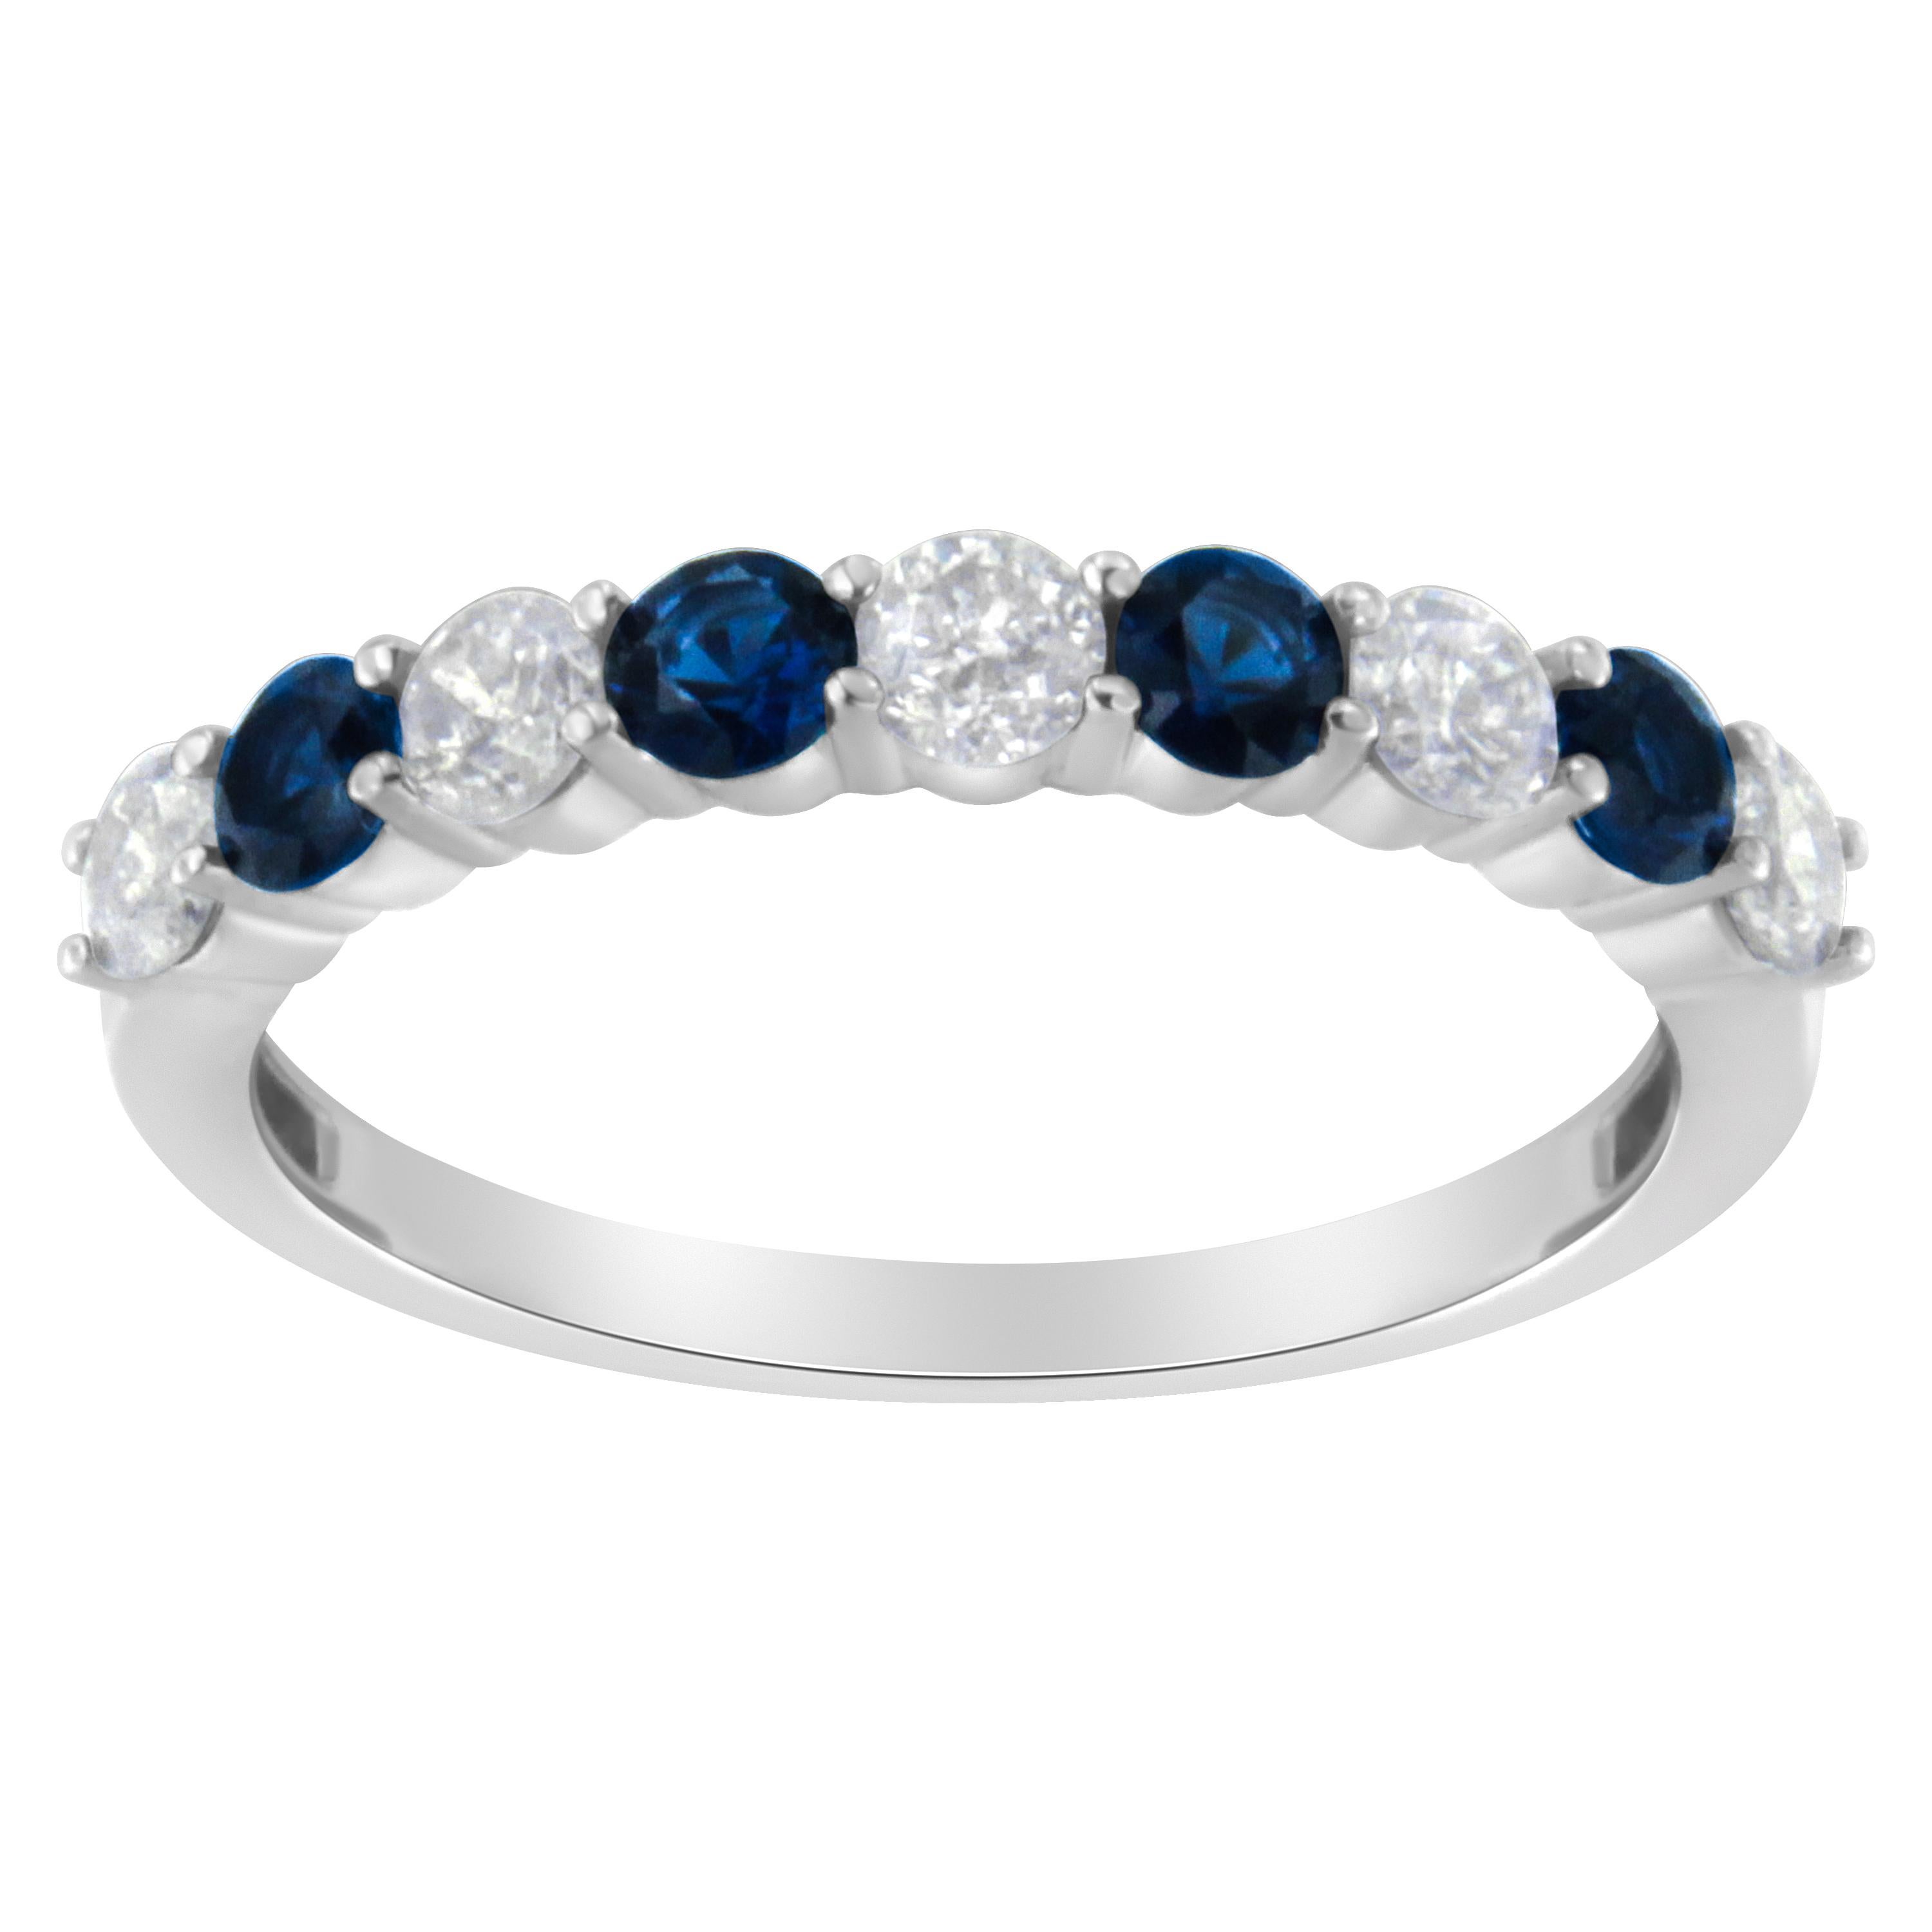 10KT White Gold 1/2 Carat Diamond & 3MM Created Blue Sapphire Gemstone Band Ring